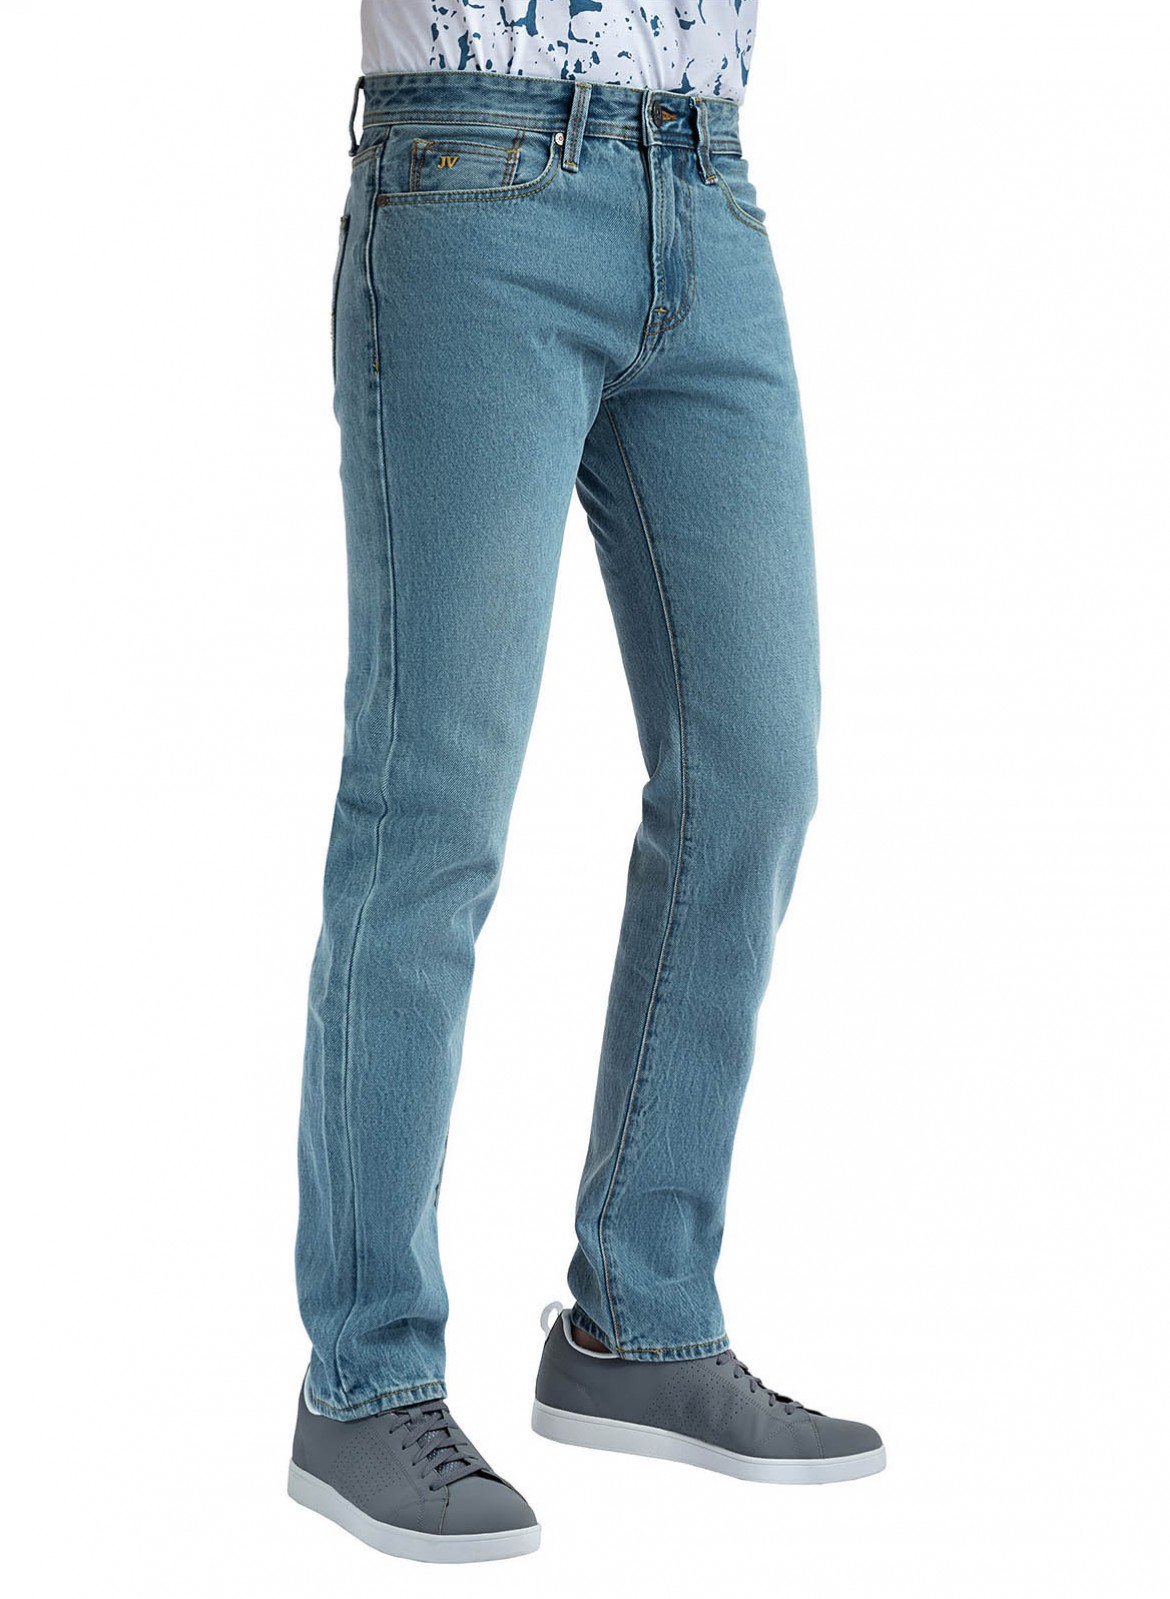 Regular jeans TITAN